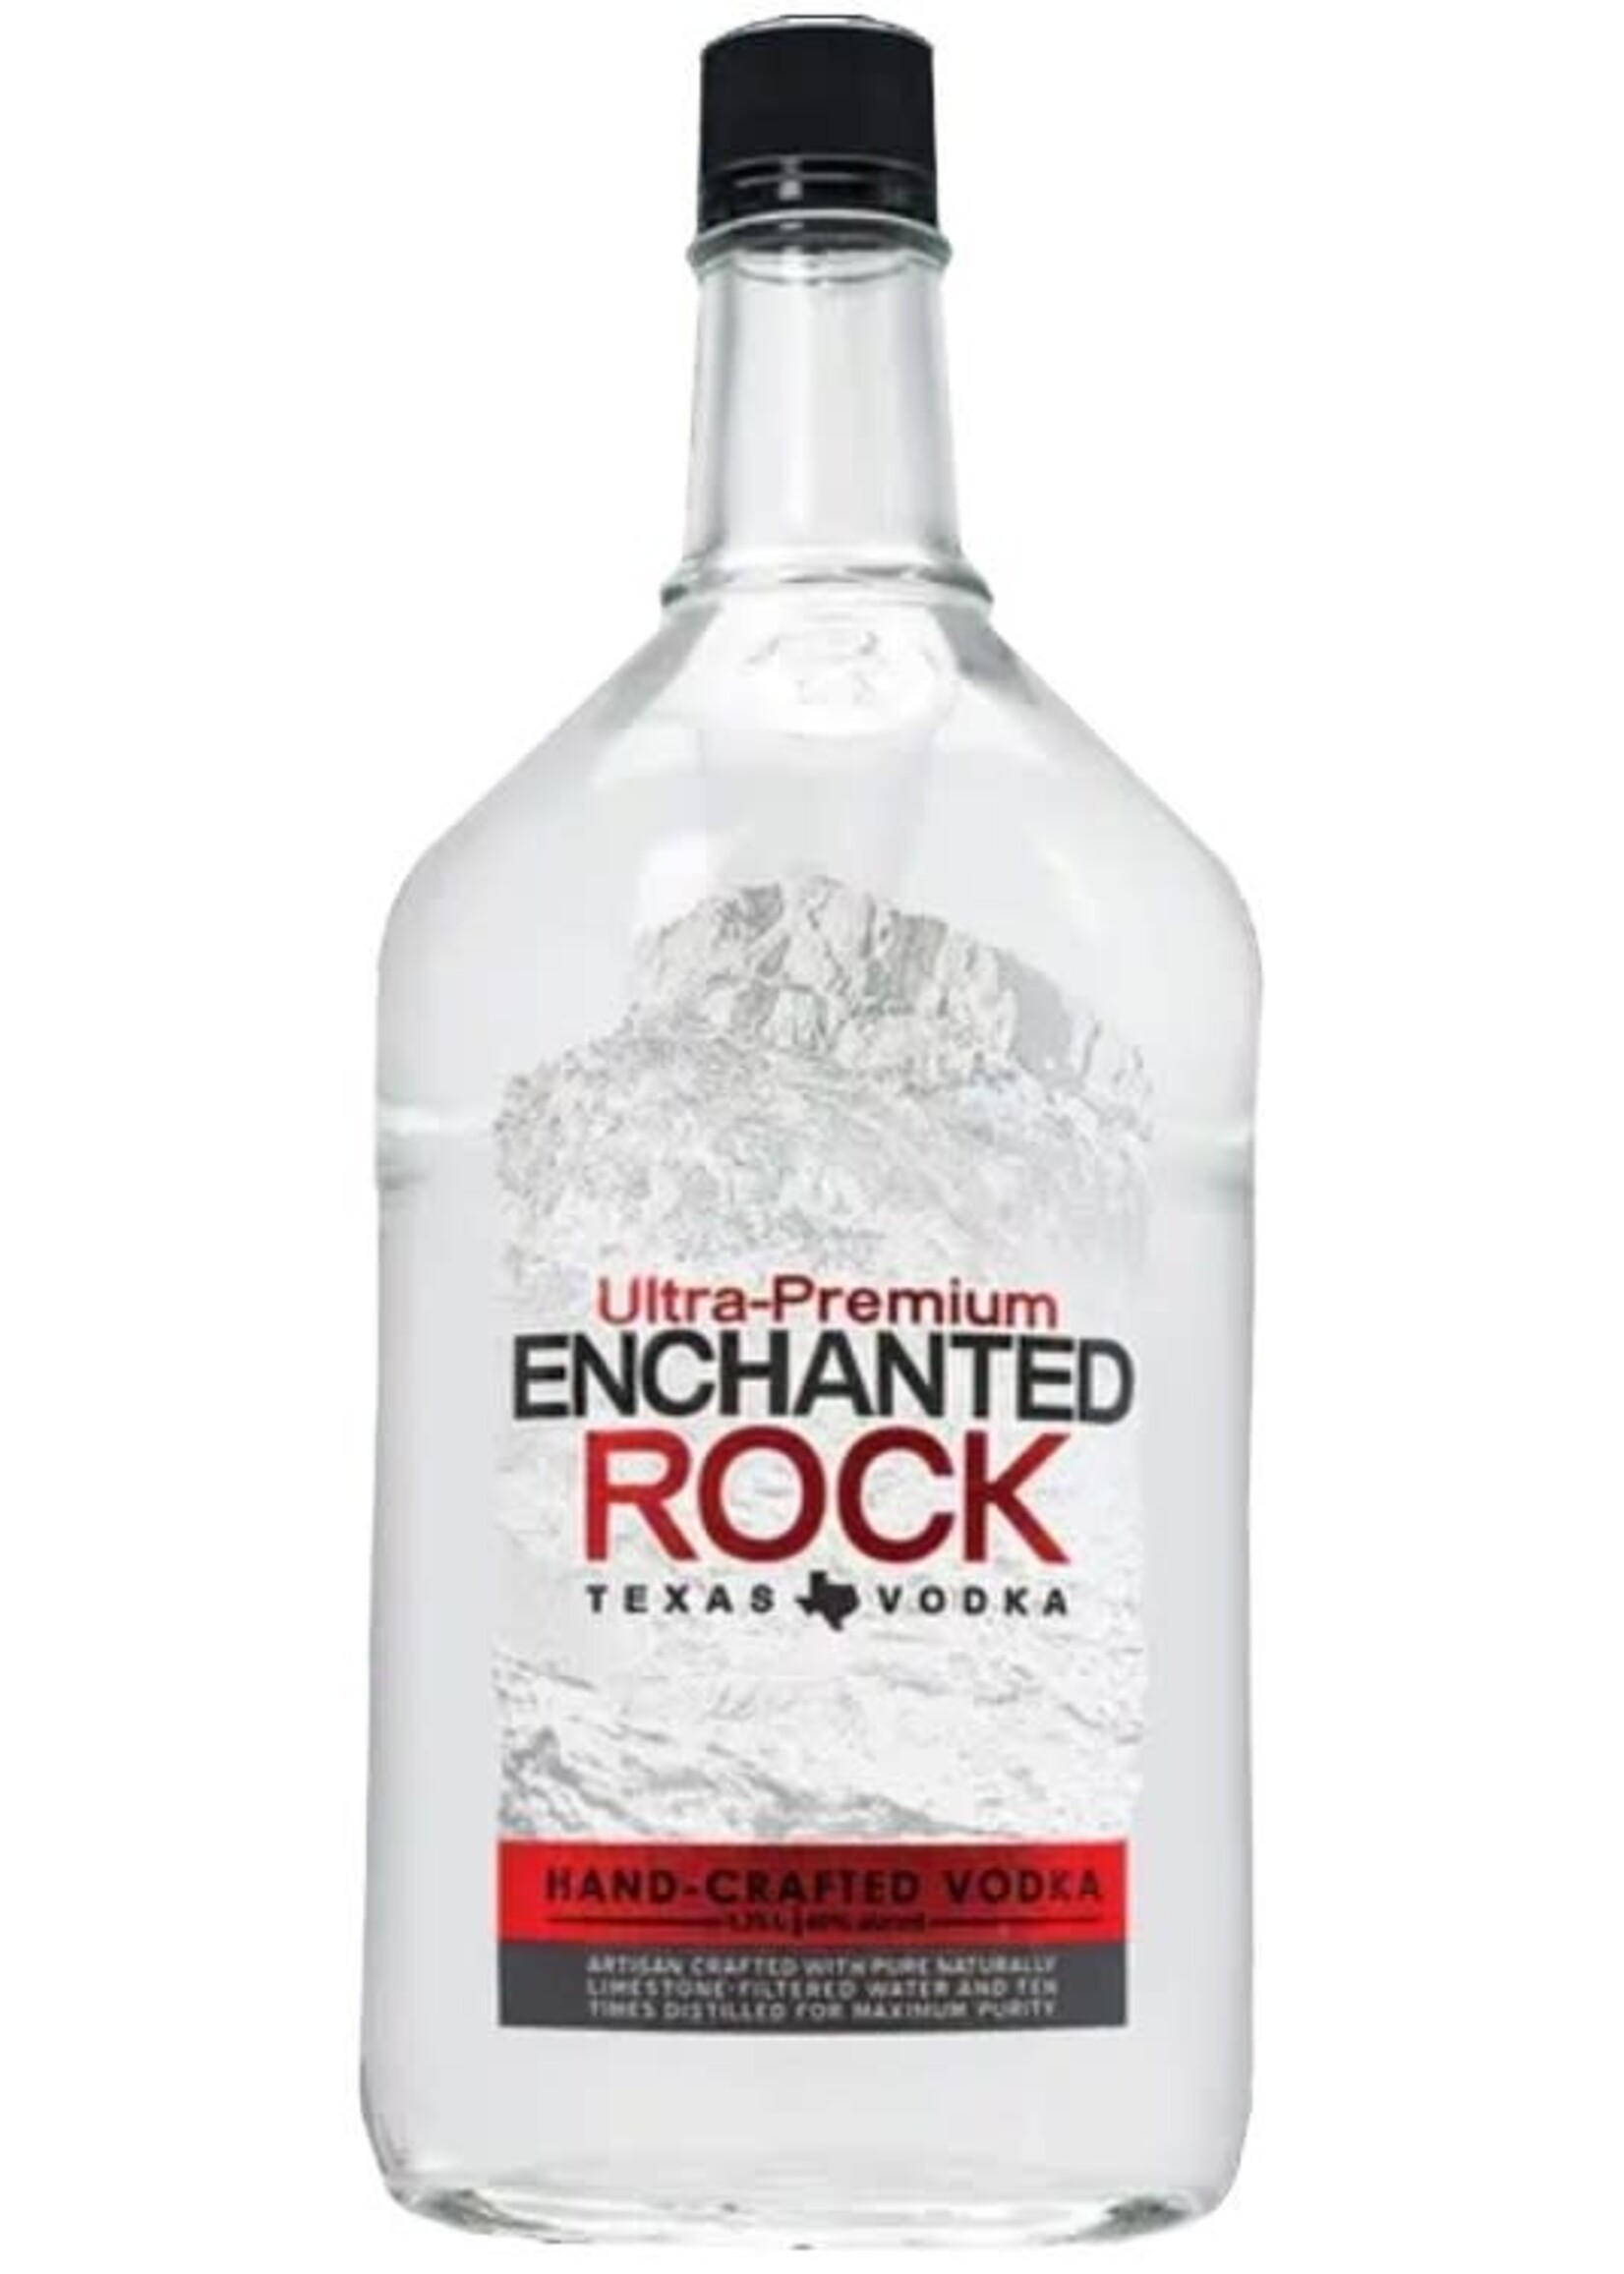 Enchanted RockTexas Vodka 80Proof 1.75 Ltr